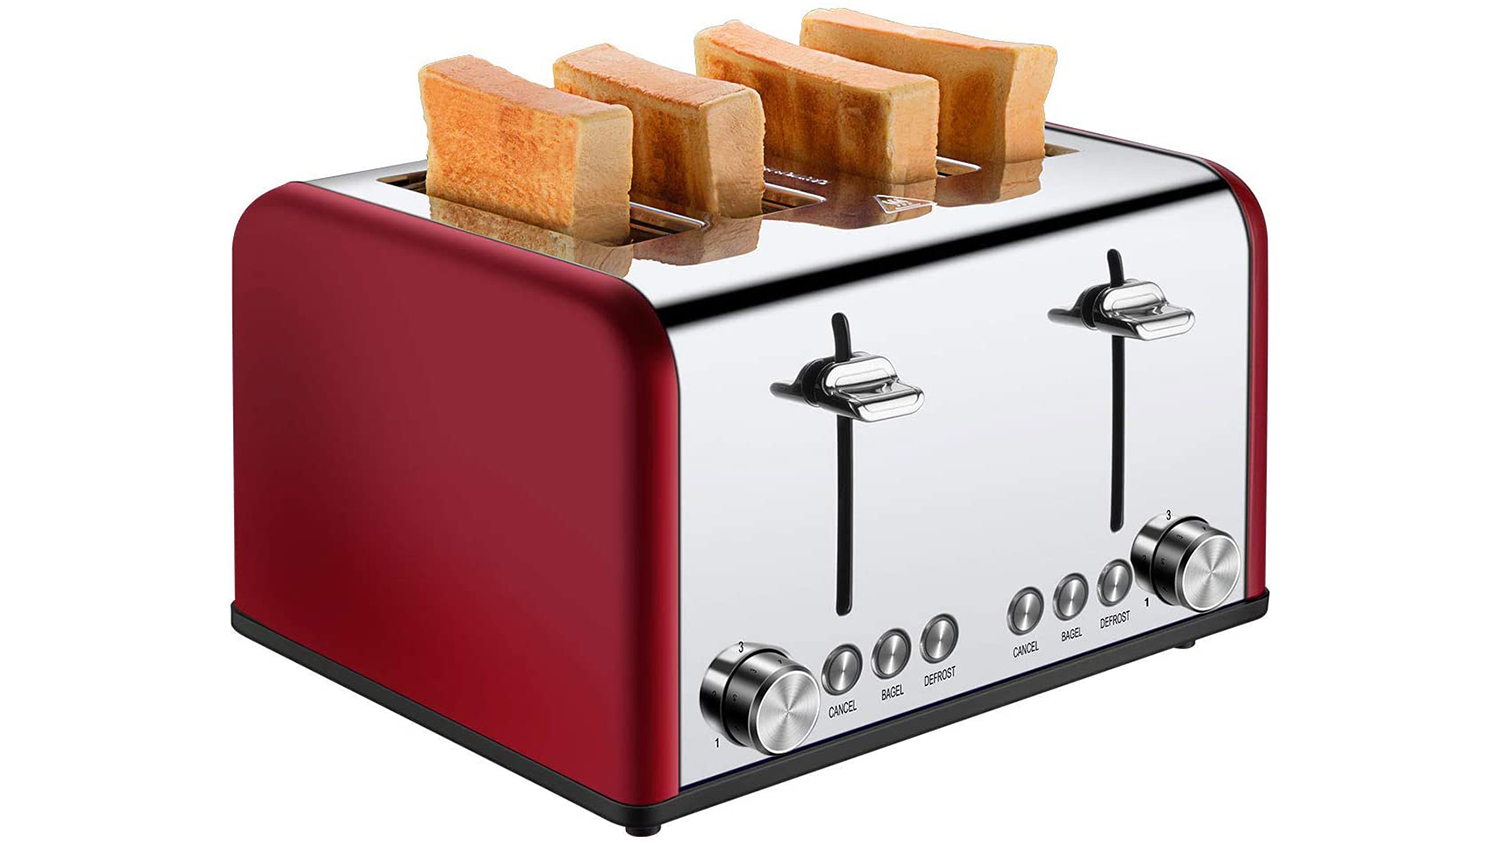 cuisibox 4 slice toaster